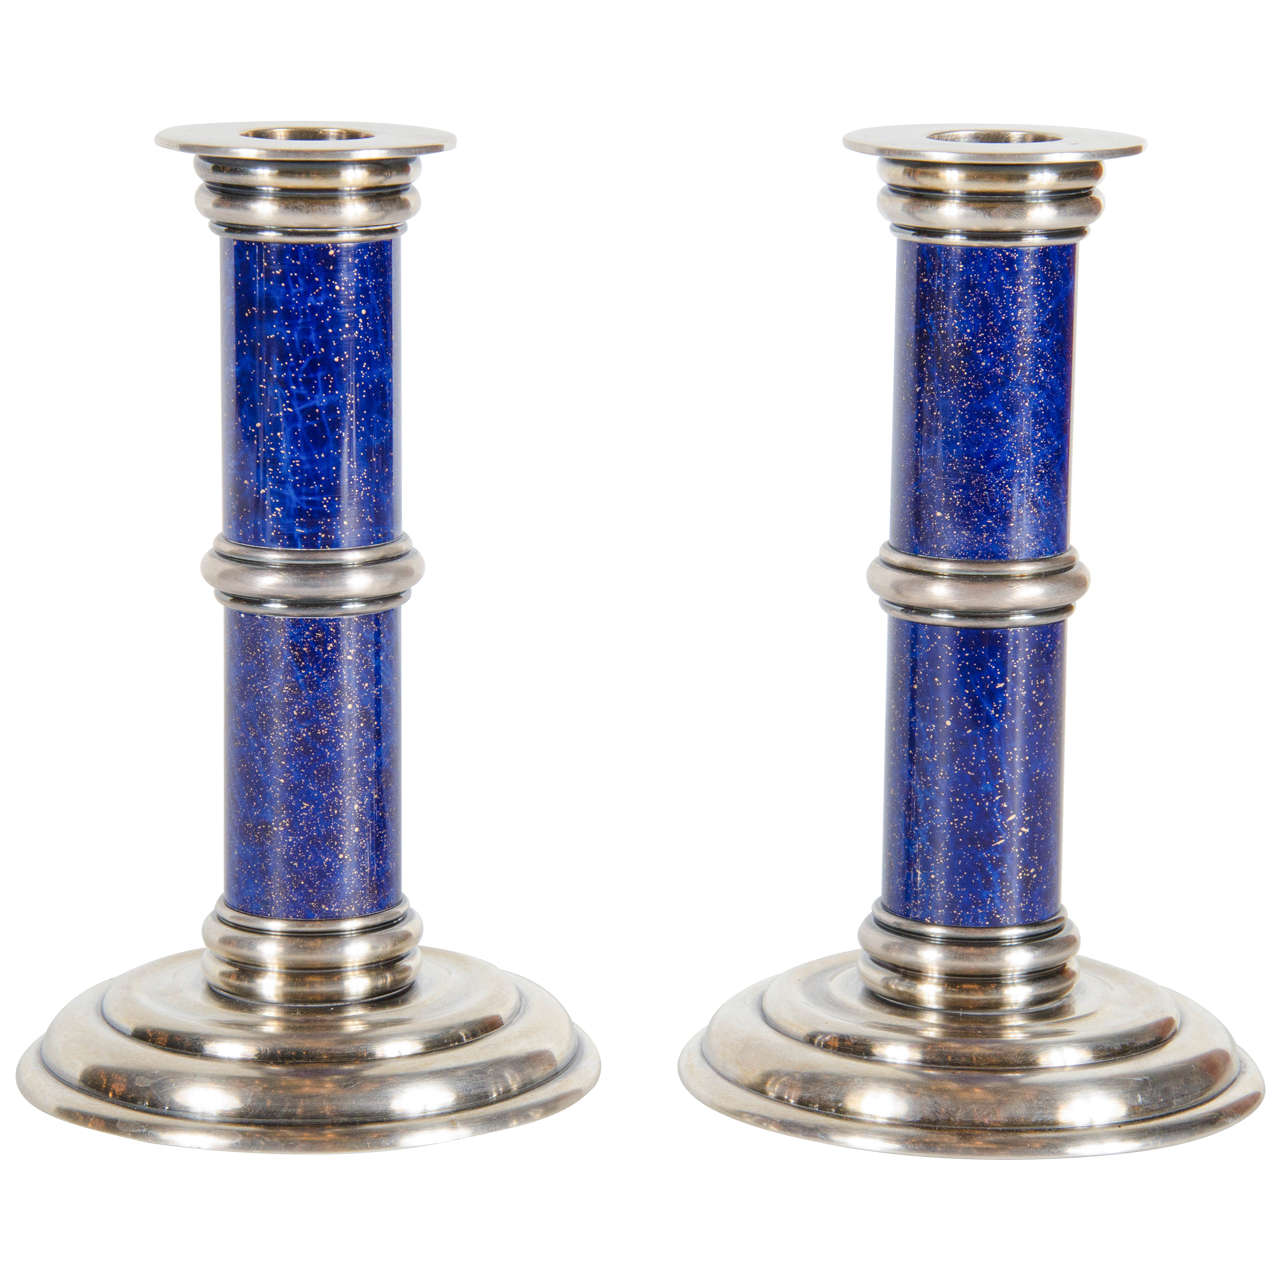 Stunning Art Deco Silver and Lapis Lazuli Candleholders by Puiforcat